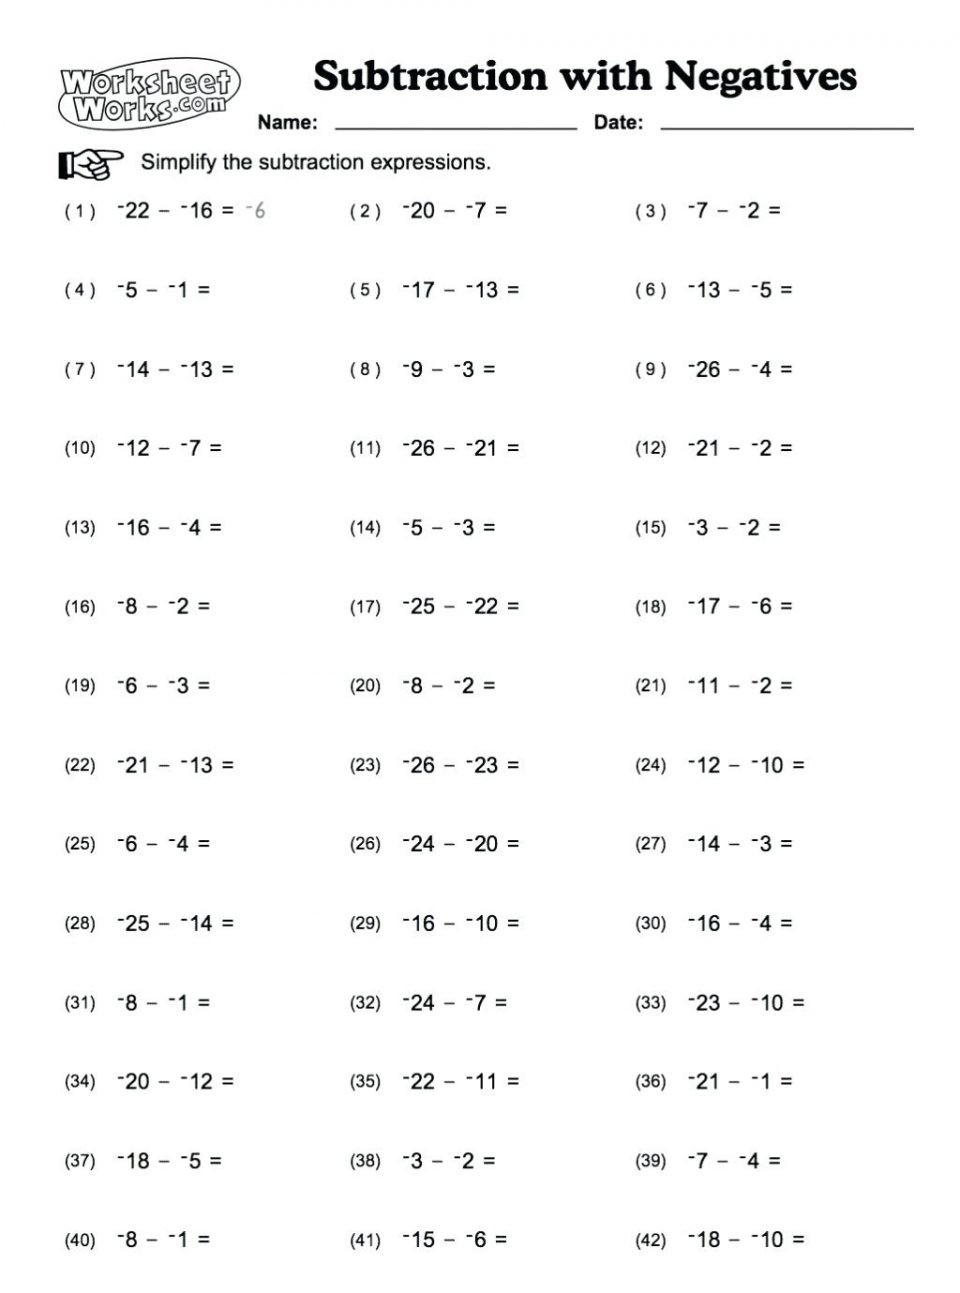 rational-numbers-worksheet-6th-grade